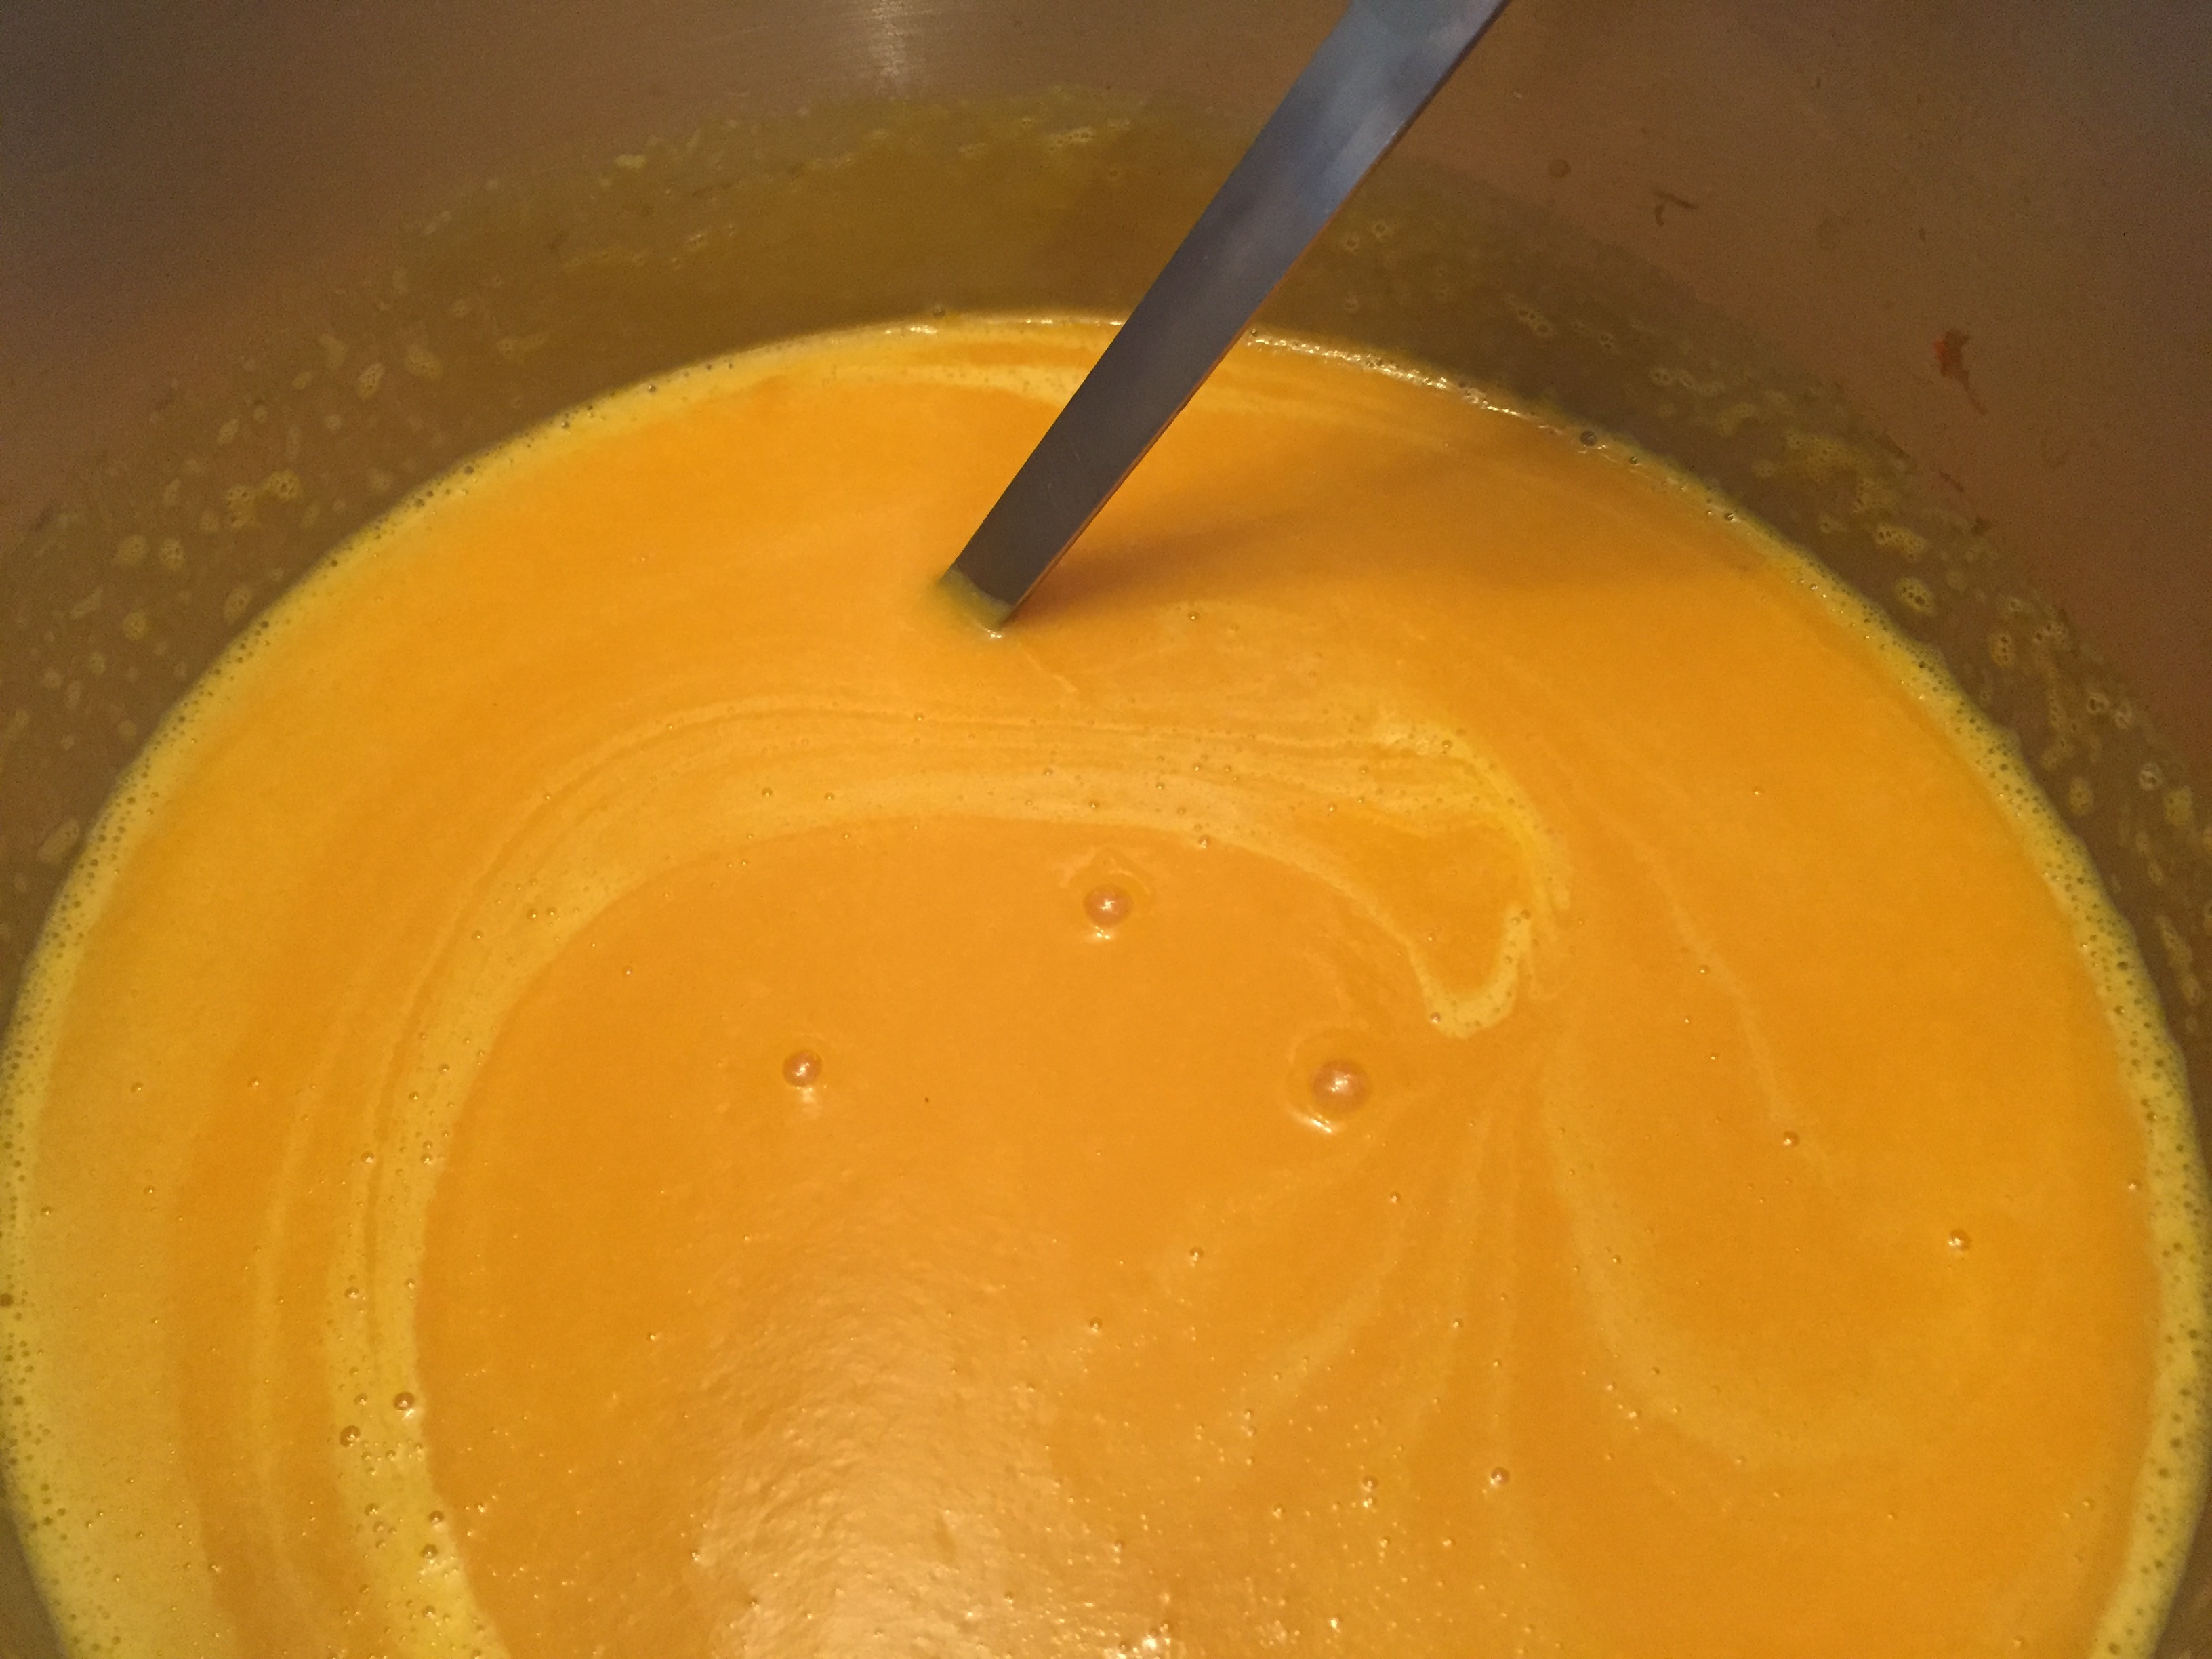 Butternut Squash Soup